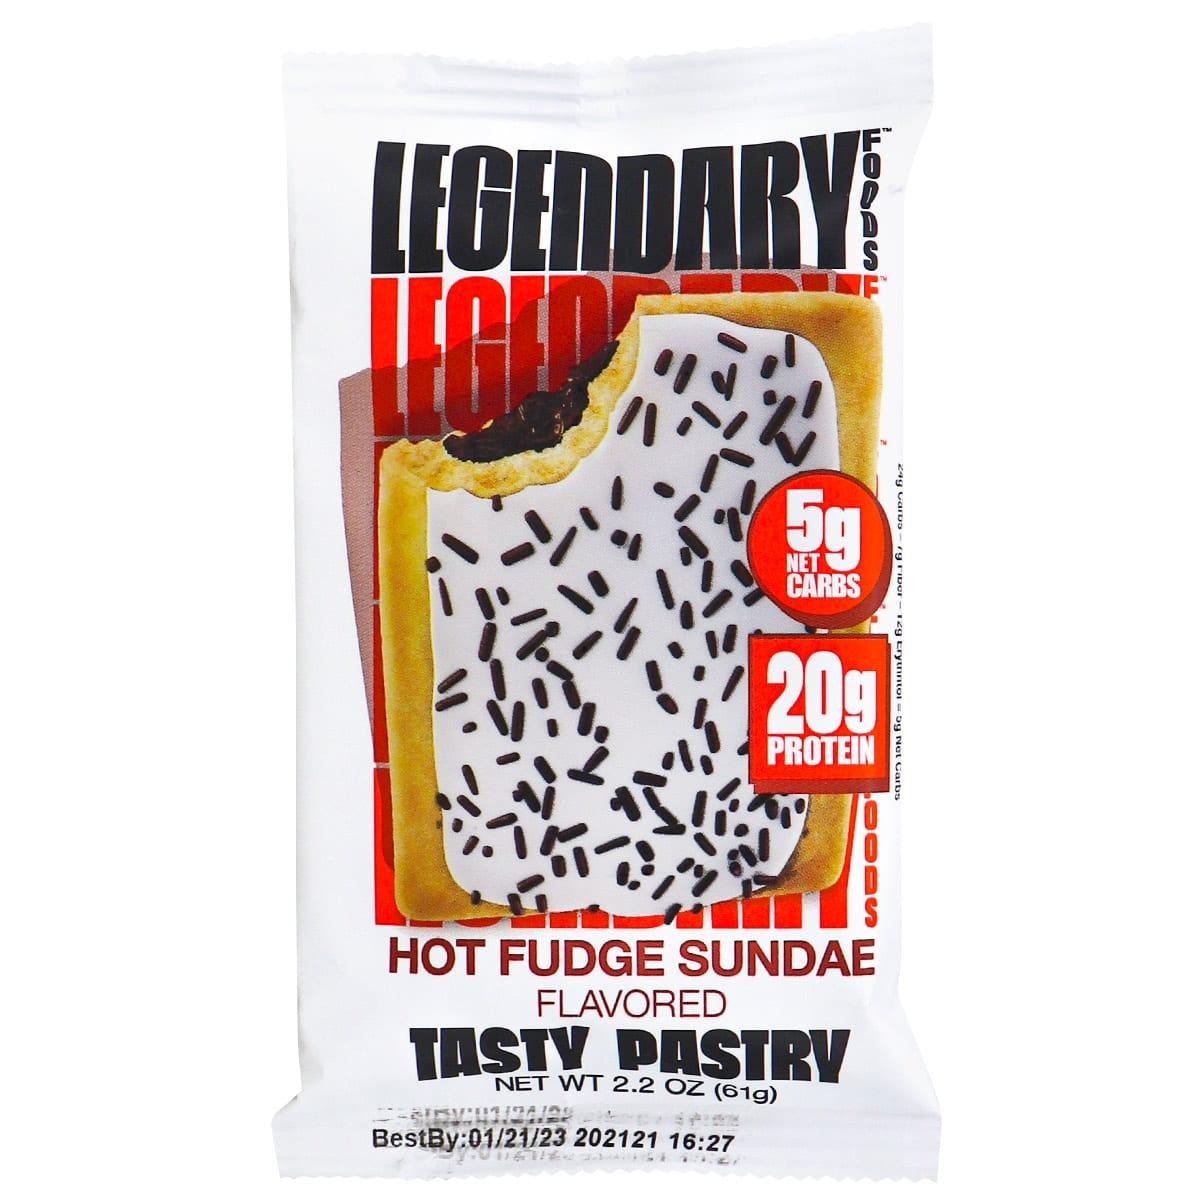 Legendary Foods Tasty Pastry Hot Fudge Sundae Flavoured, 61g